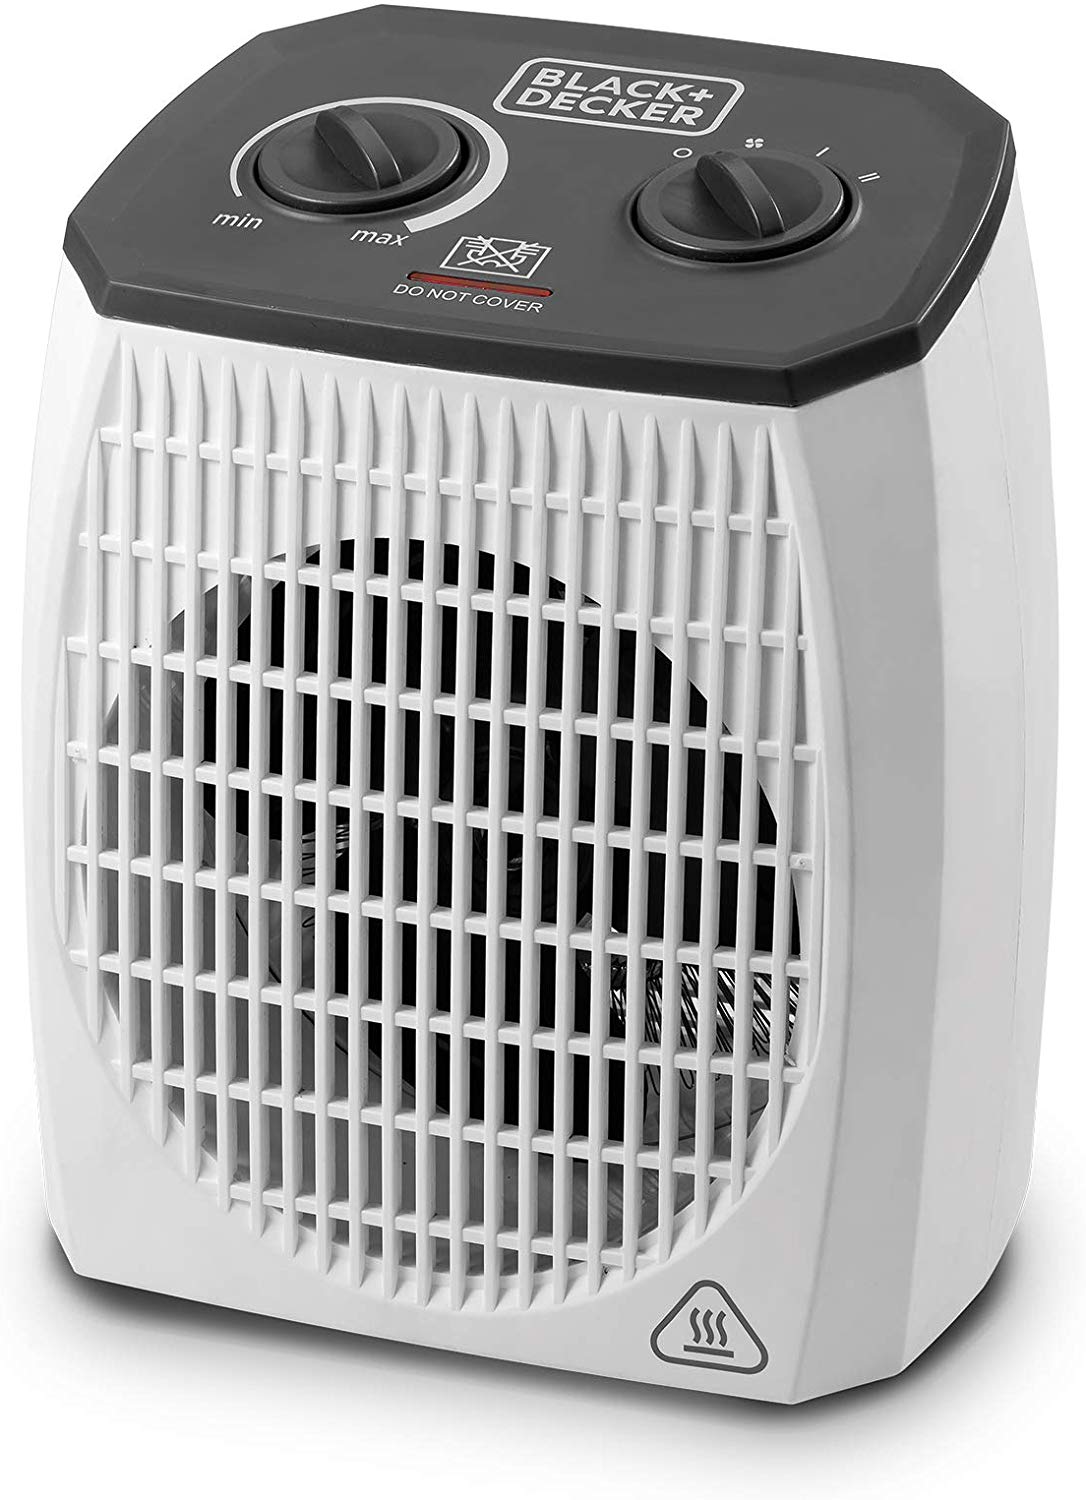 220 volt electric heater